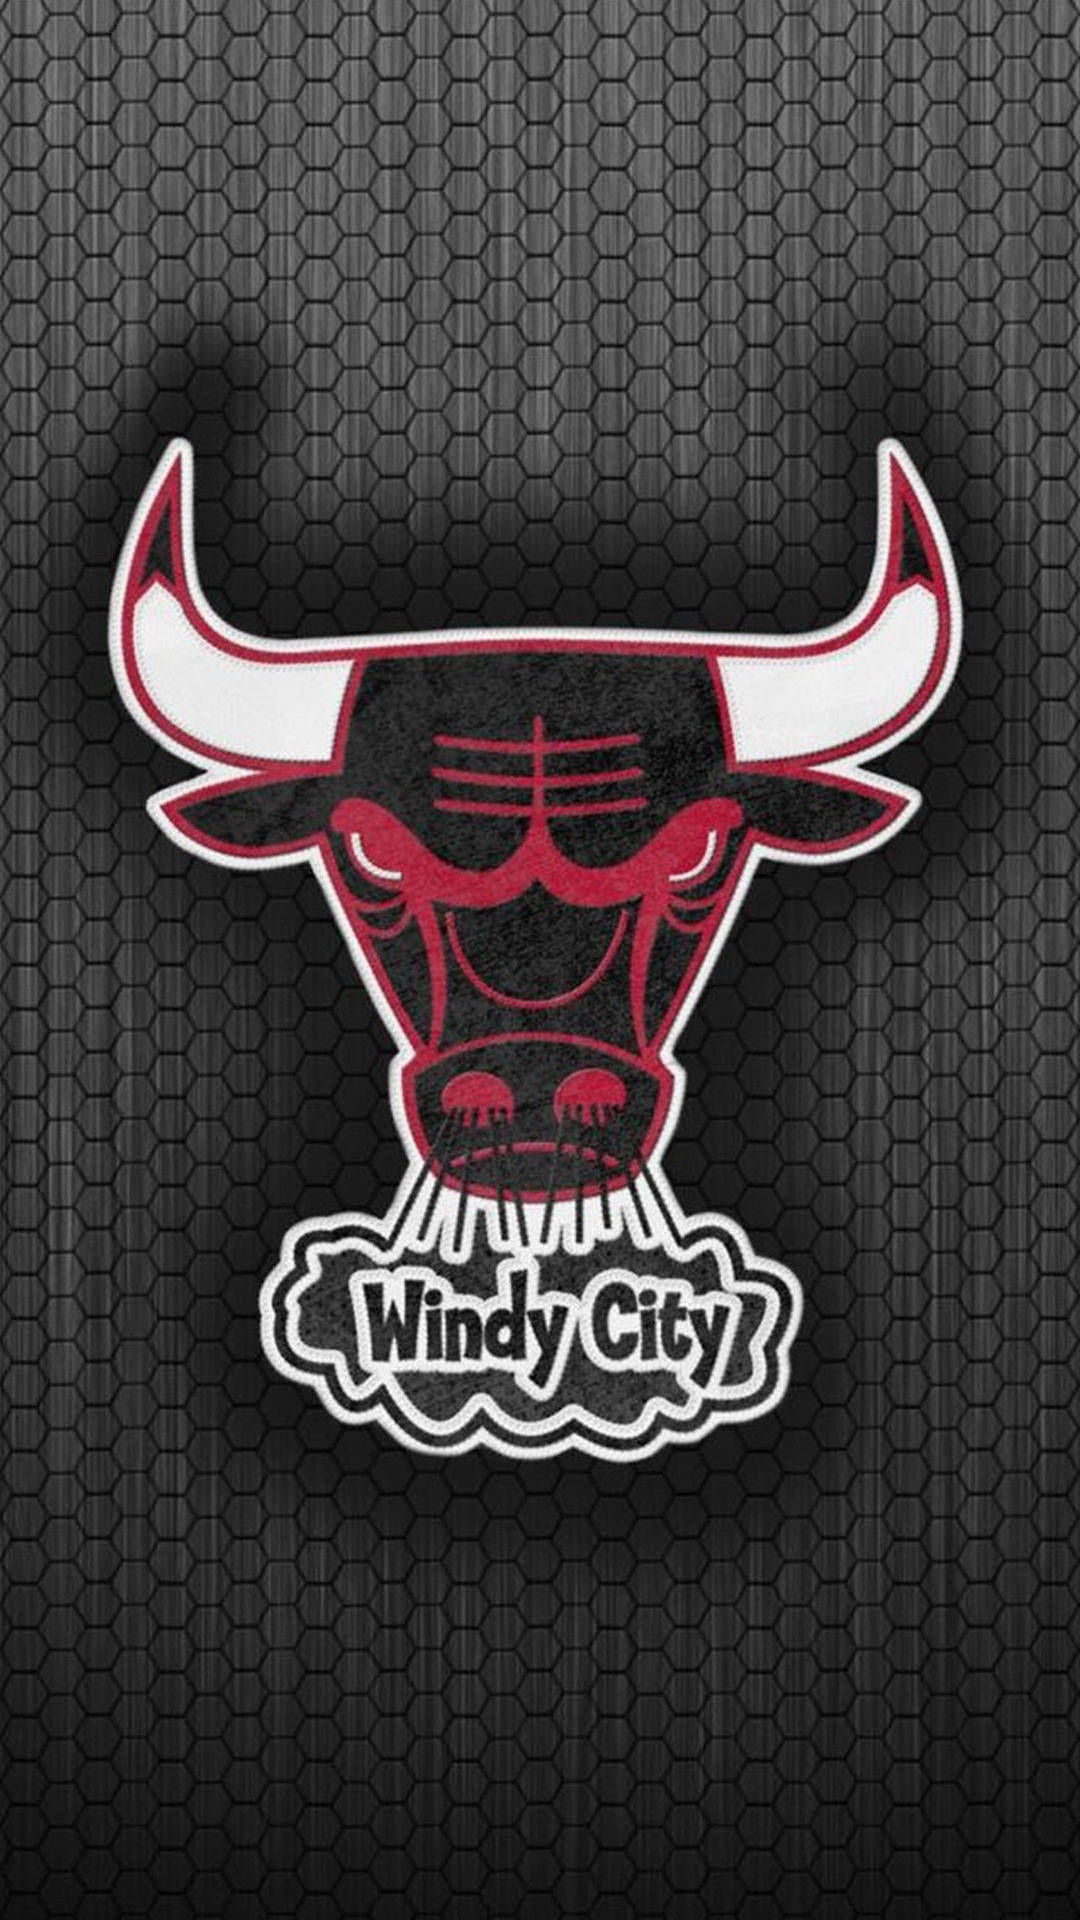 Chicago Bulls Windy City Patch Logo Background